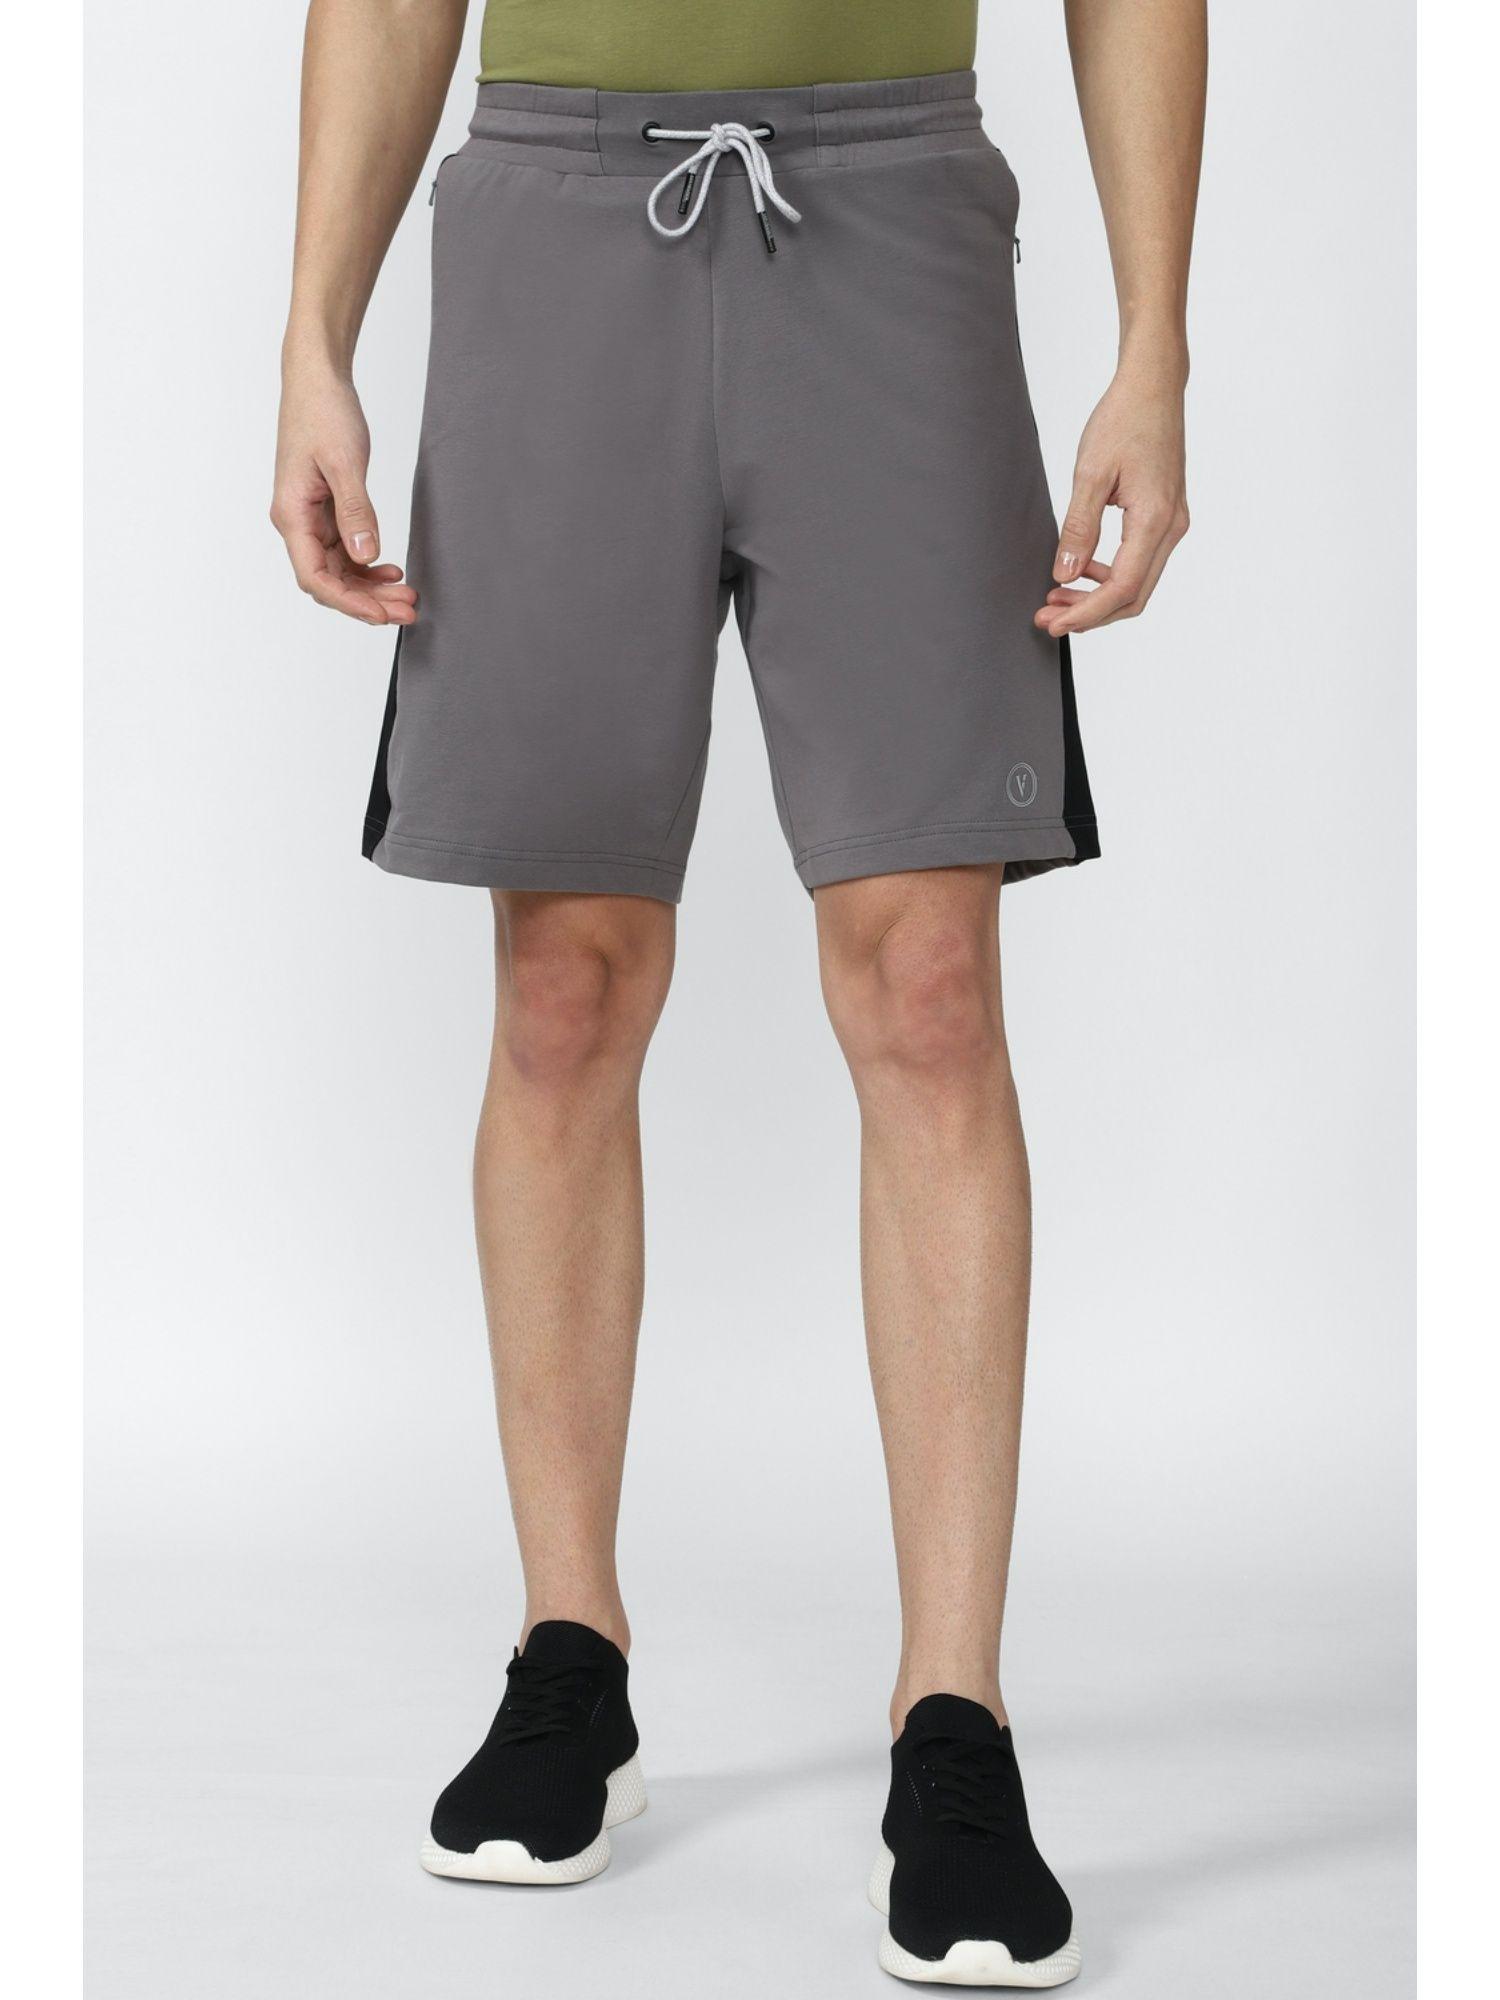 grey-shorts